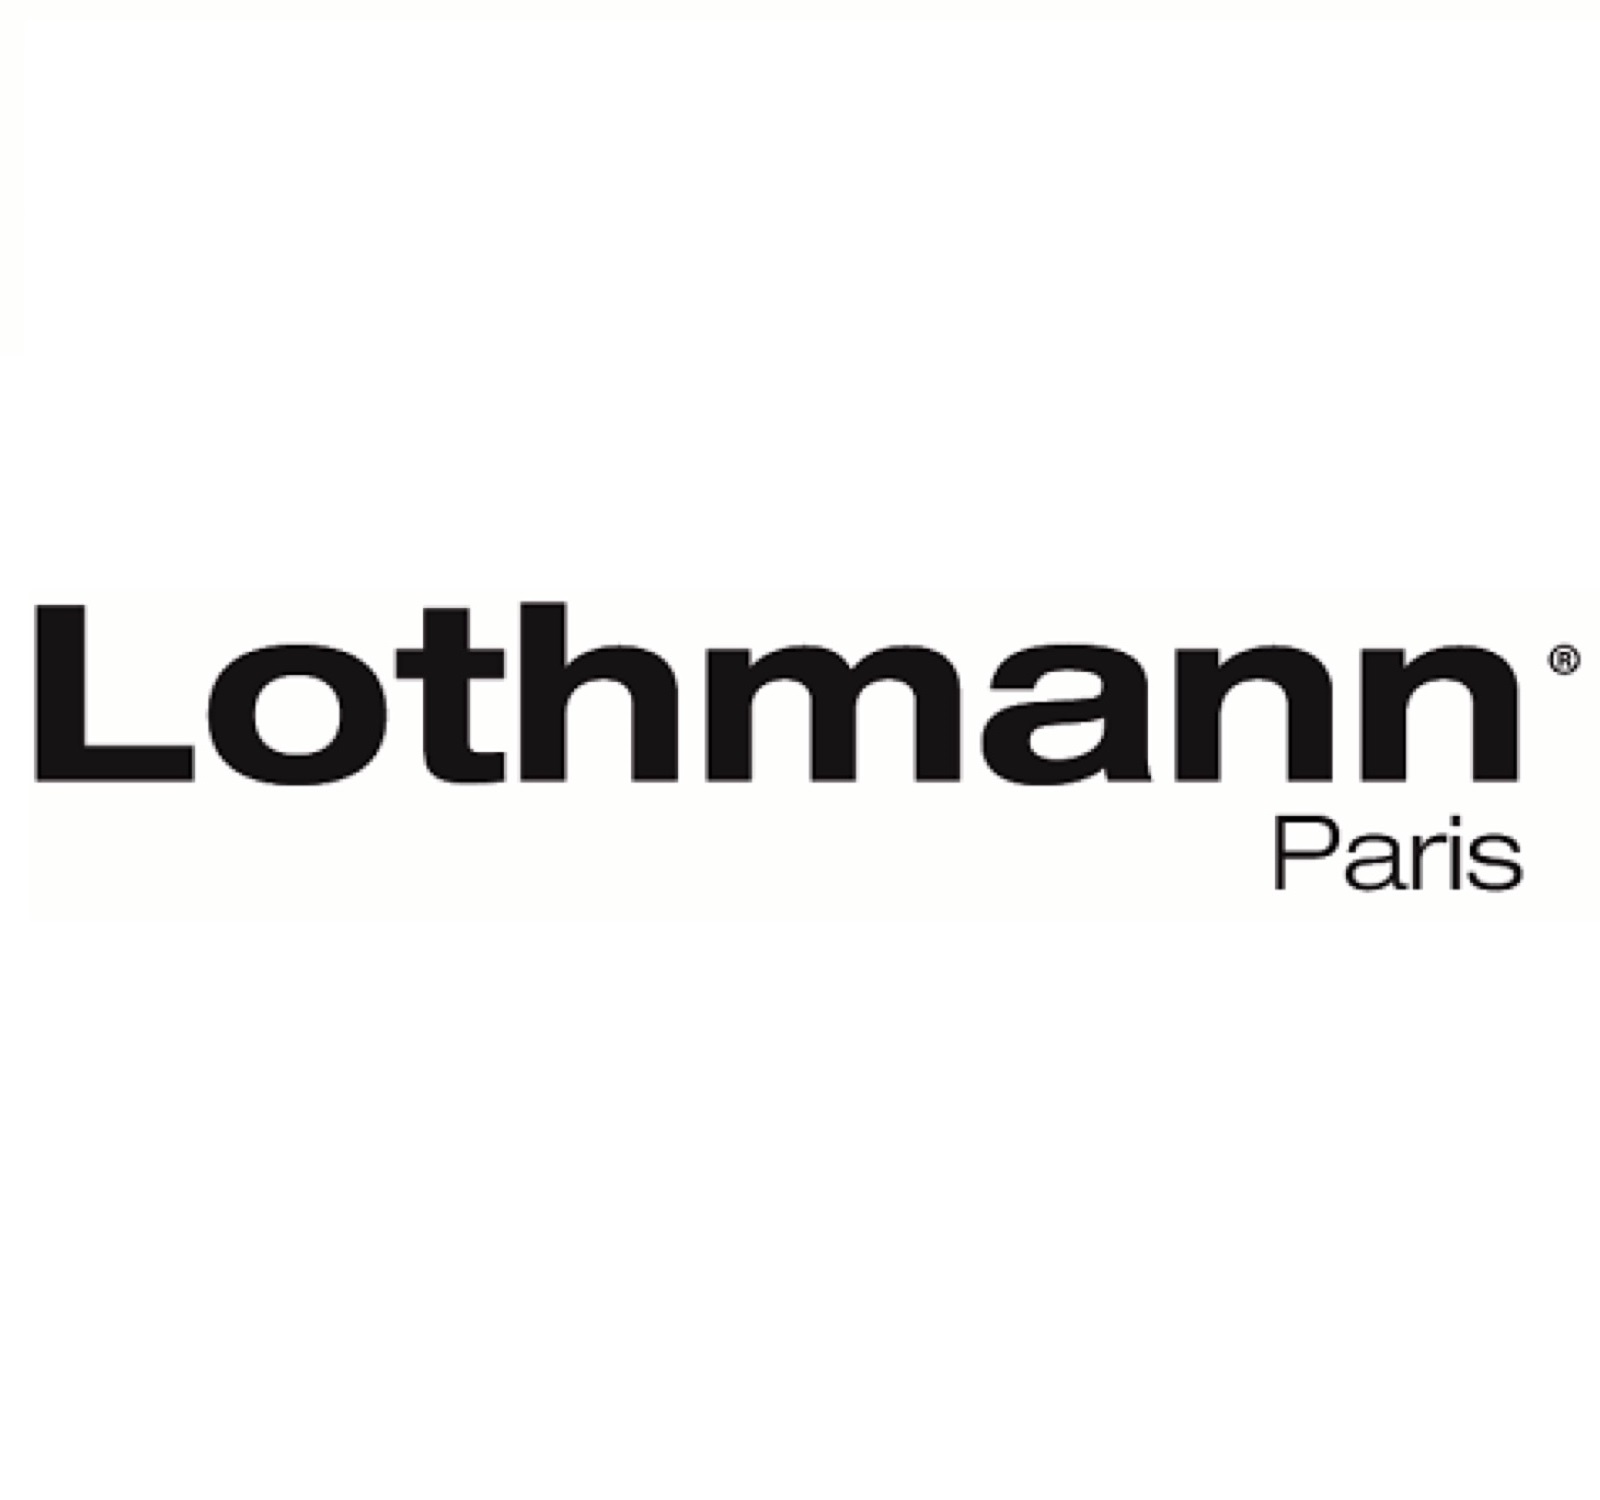 Lothmann